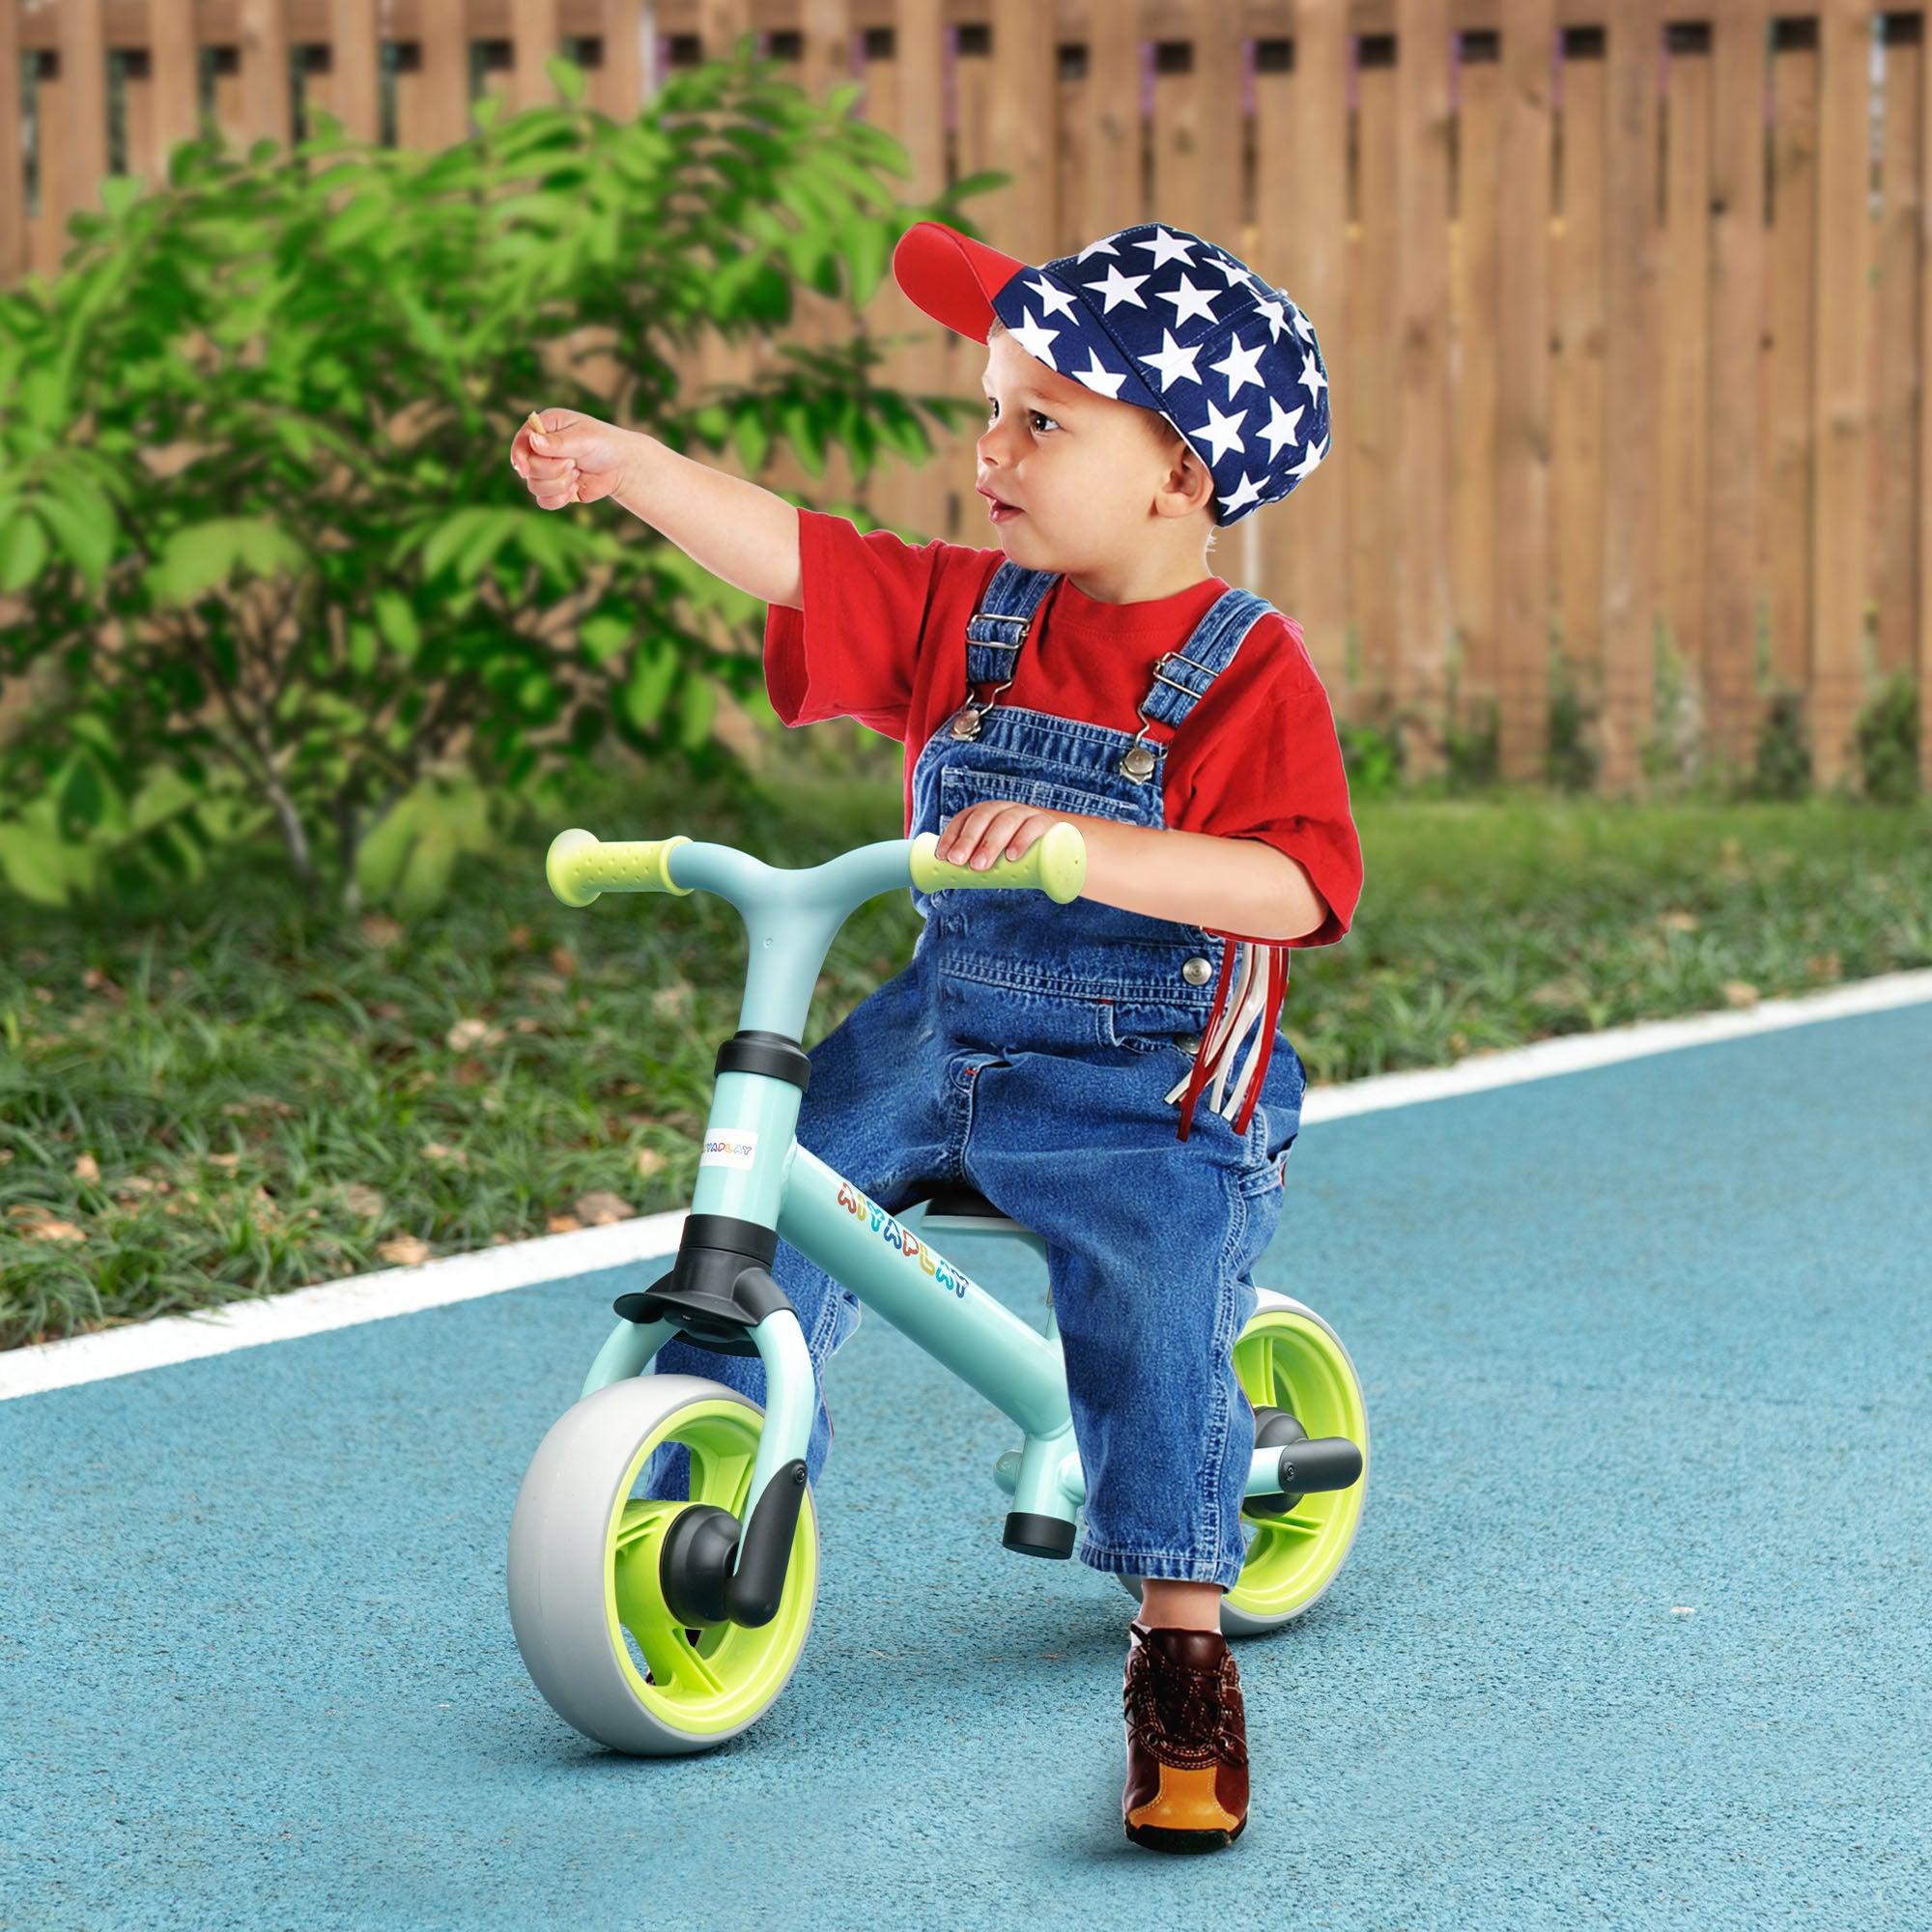 AIYAPLAY 8" Balance Bike, Lightweight Training Bike for Children, with Adjustable Seat, EVA Wheels, Easy installation - Green